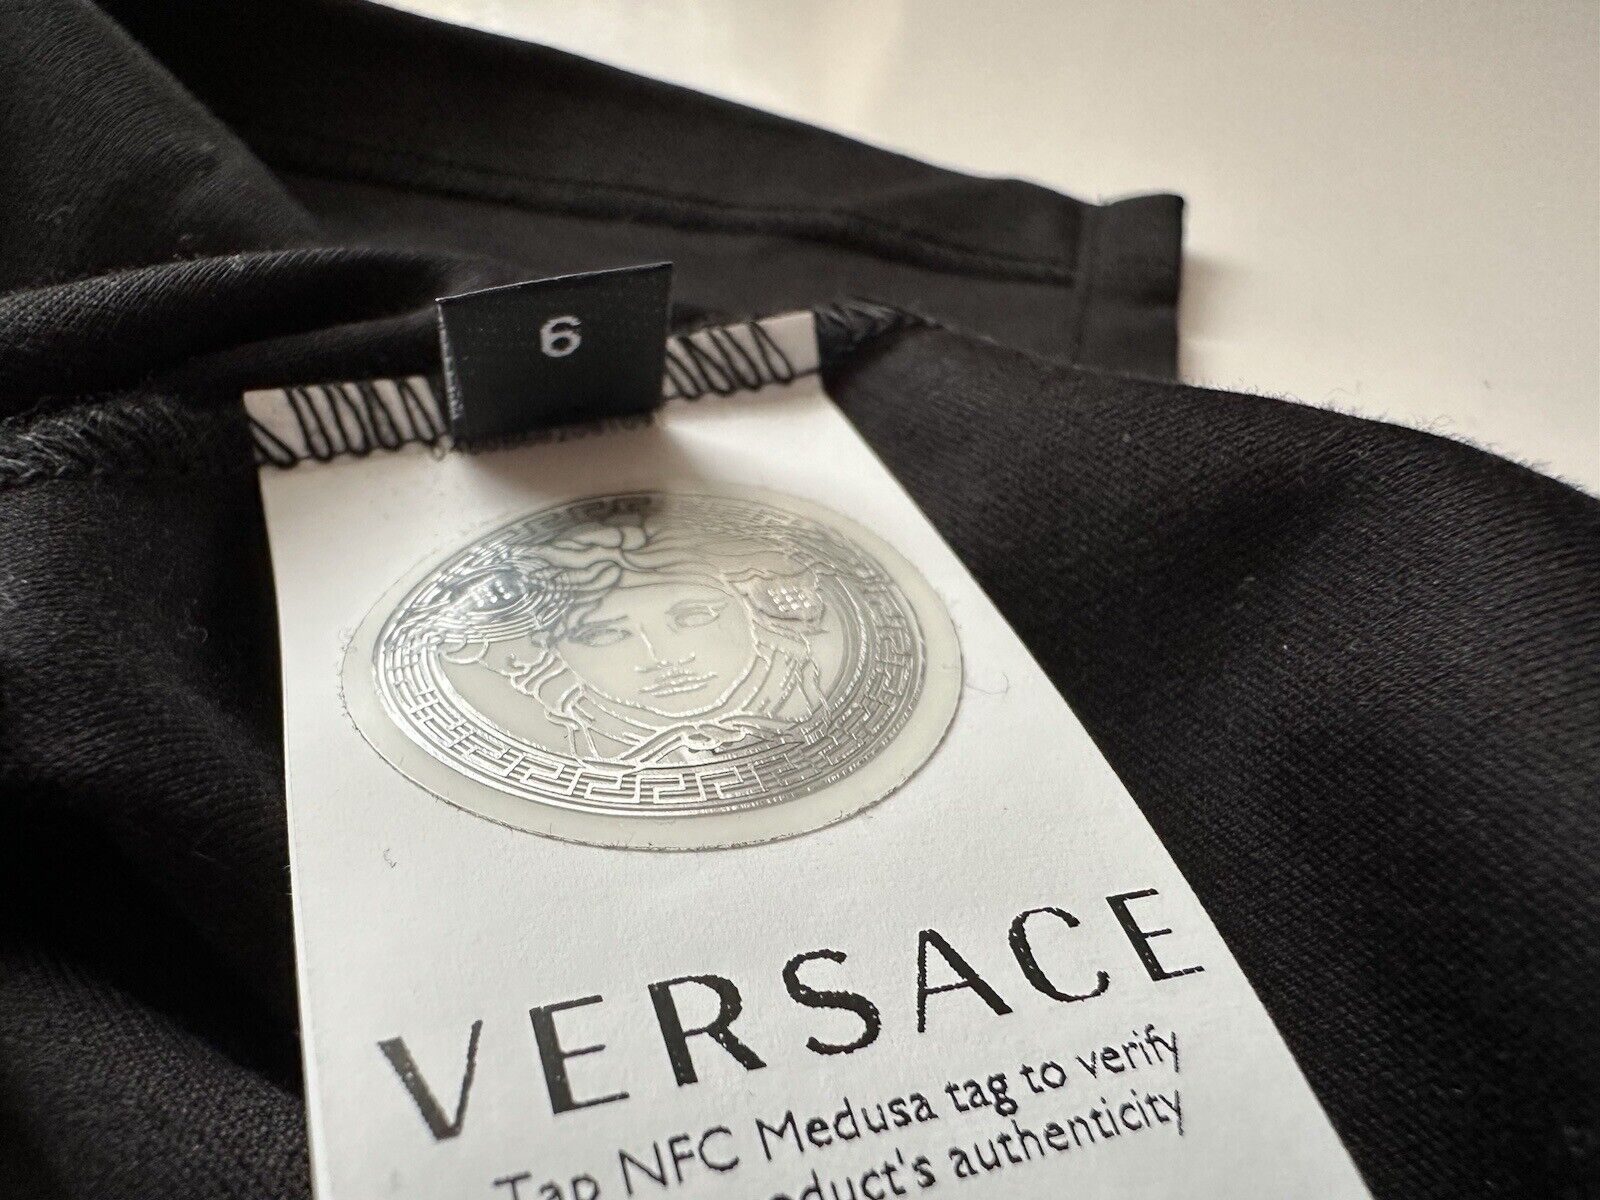 NWT $775 Versace Goddess Logo T-Shirt  6 US (40 Euro) Black 1A06529 Italy